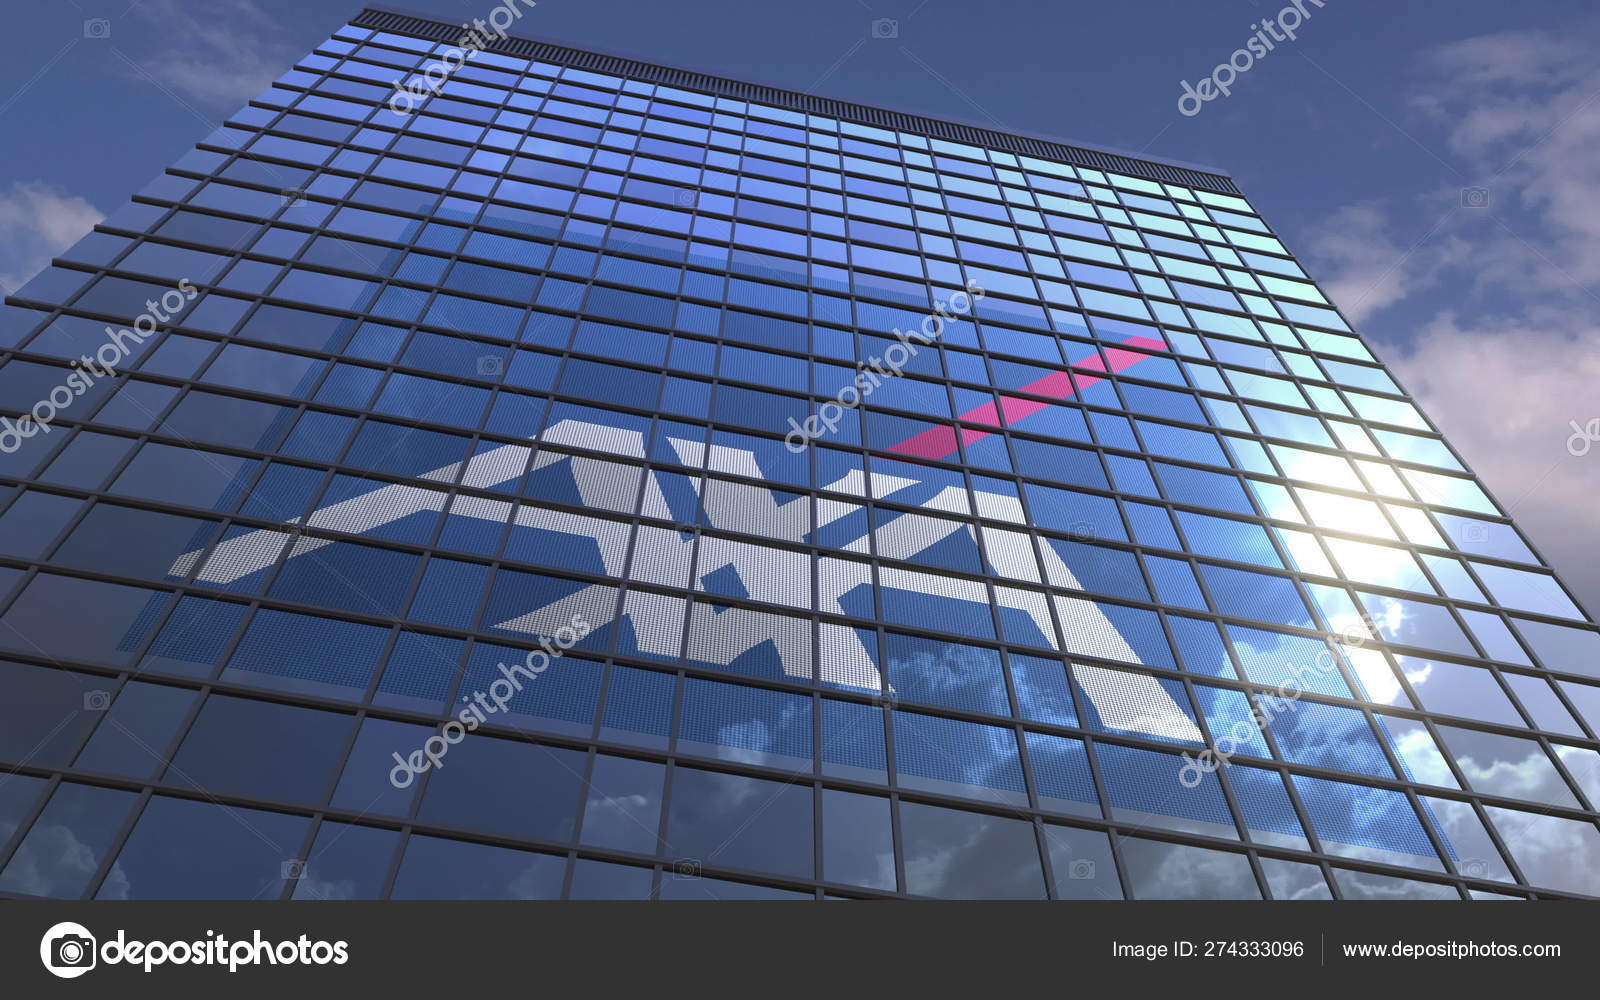 Onvoorziene omstandigheden Moreel reguleren Logo of AXA on a media facade with reflecting cloudy sky, editorial 3D  rendering – Stock Editorial Photo © alexeynovikov #274333096